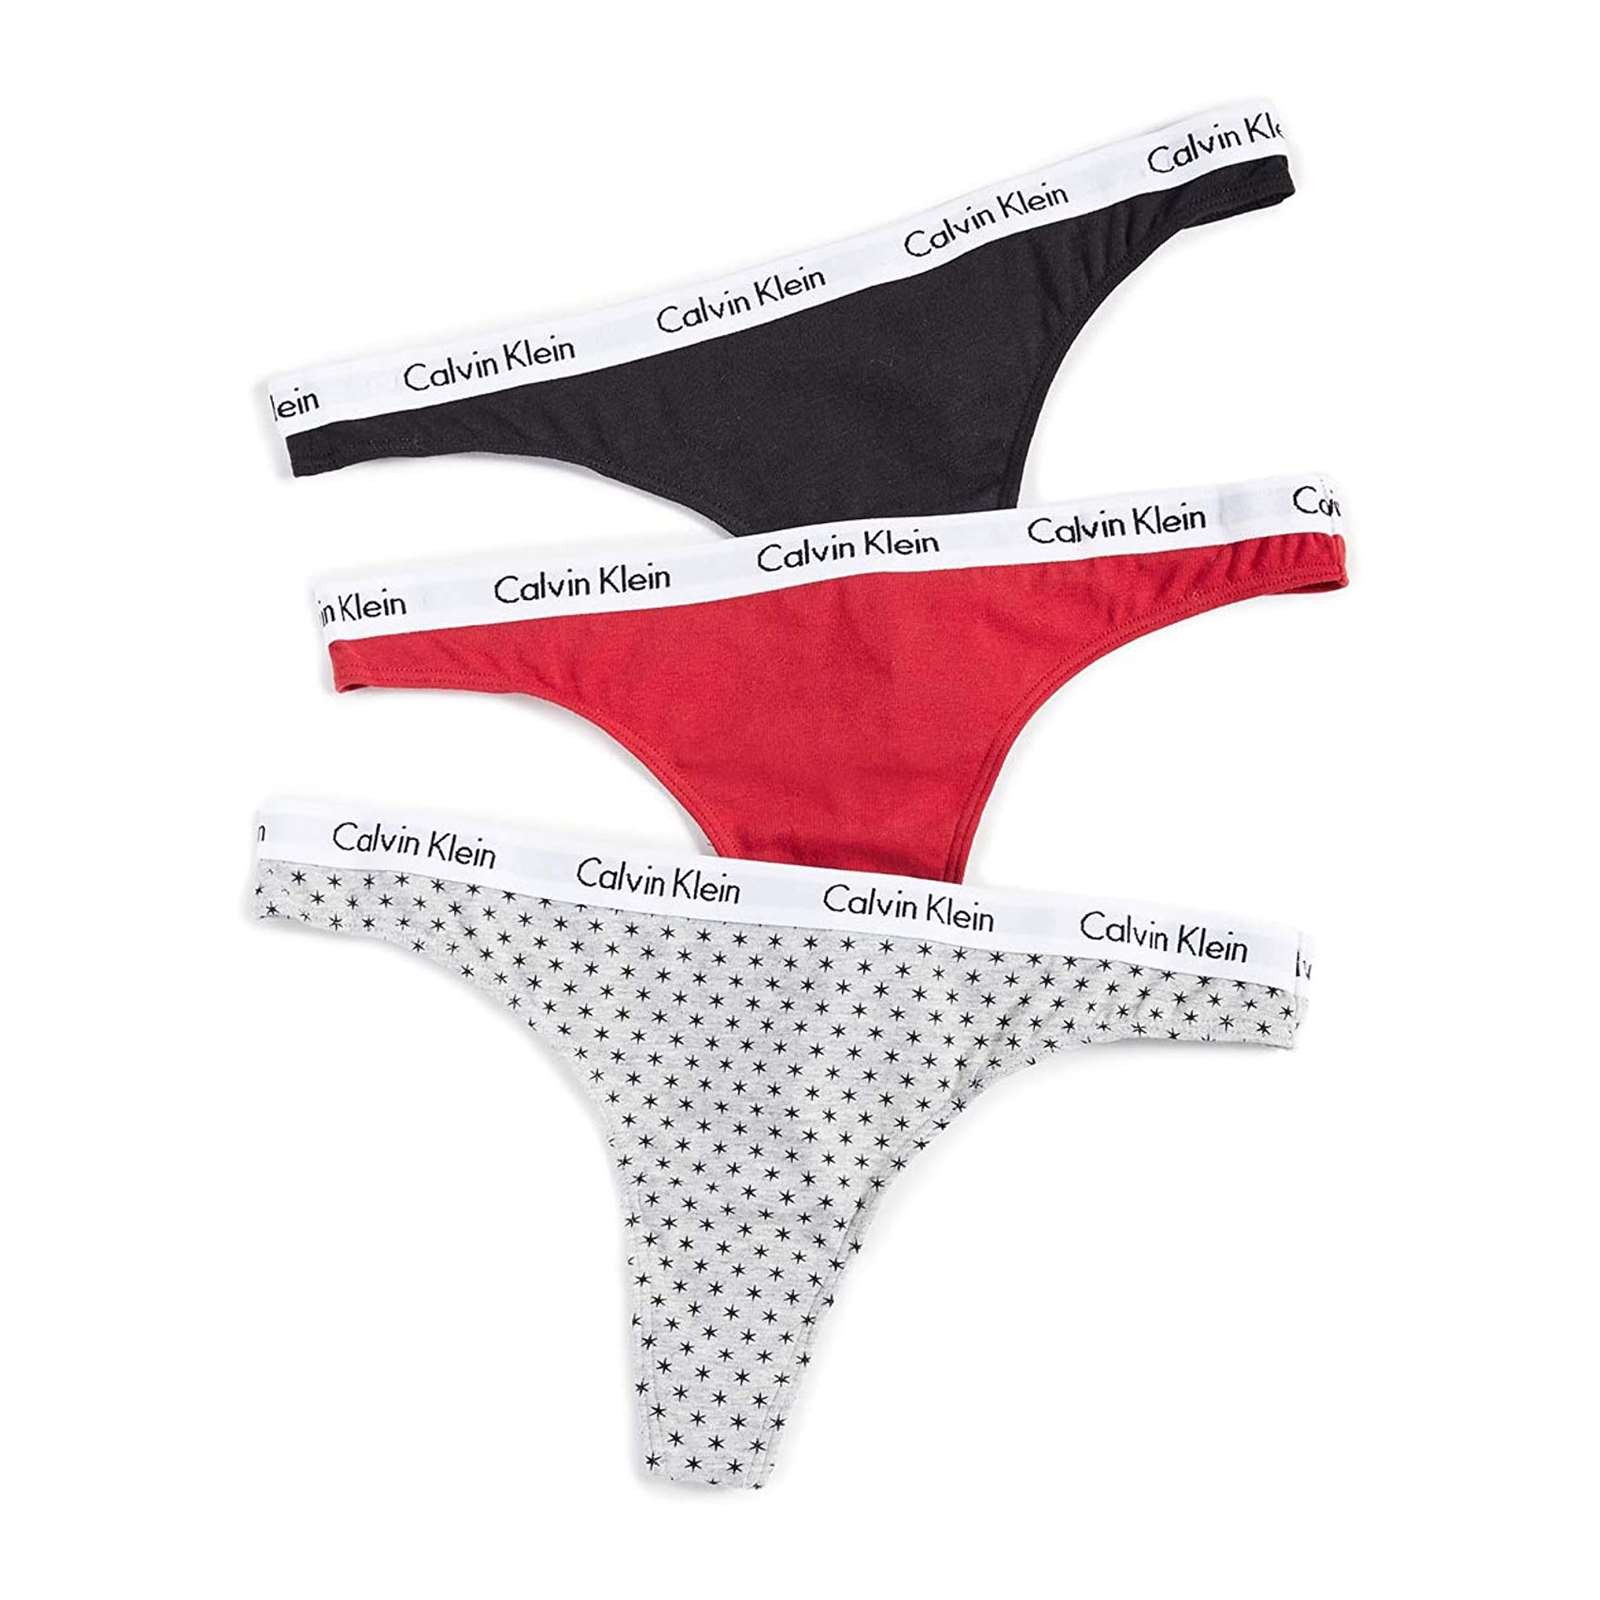 Calvin Klein Carousel Thong Panty Sale 2021